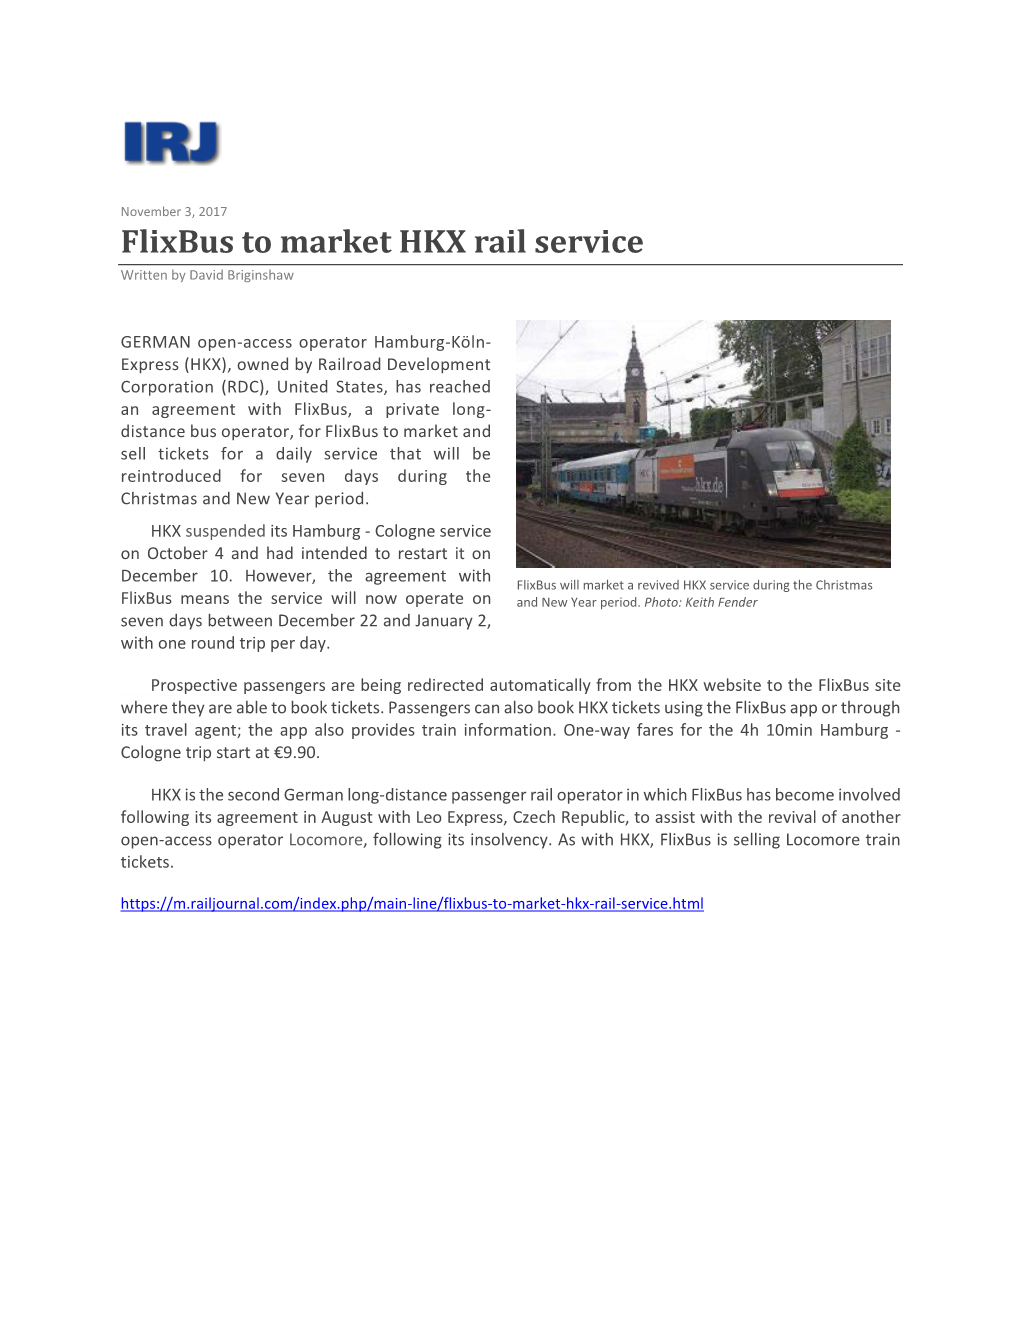 Flixbus to Market HKX Rail Service Written by David Briginshaw